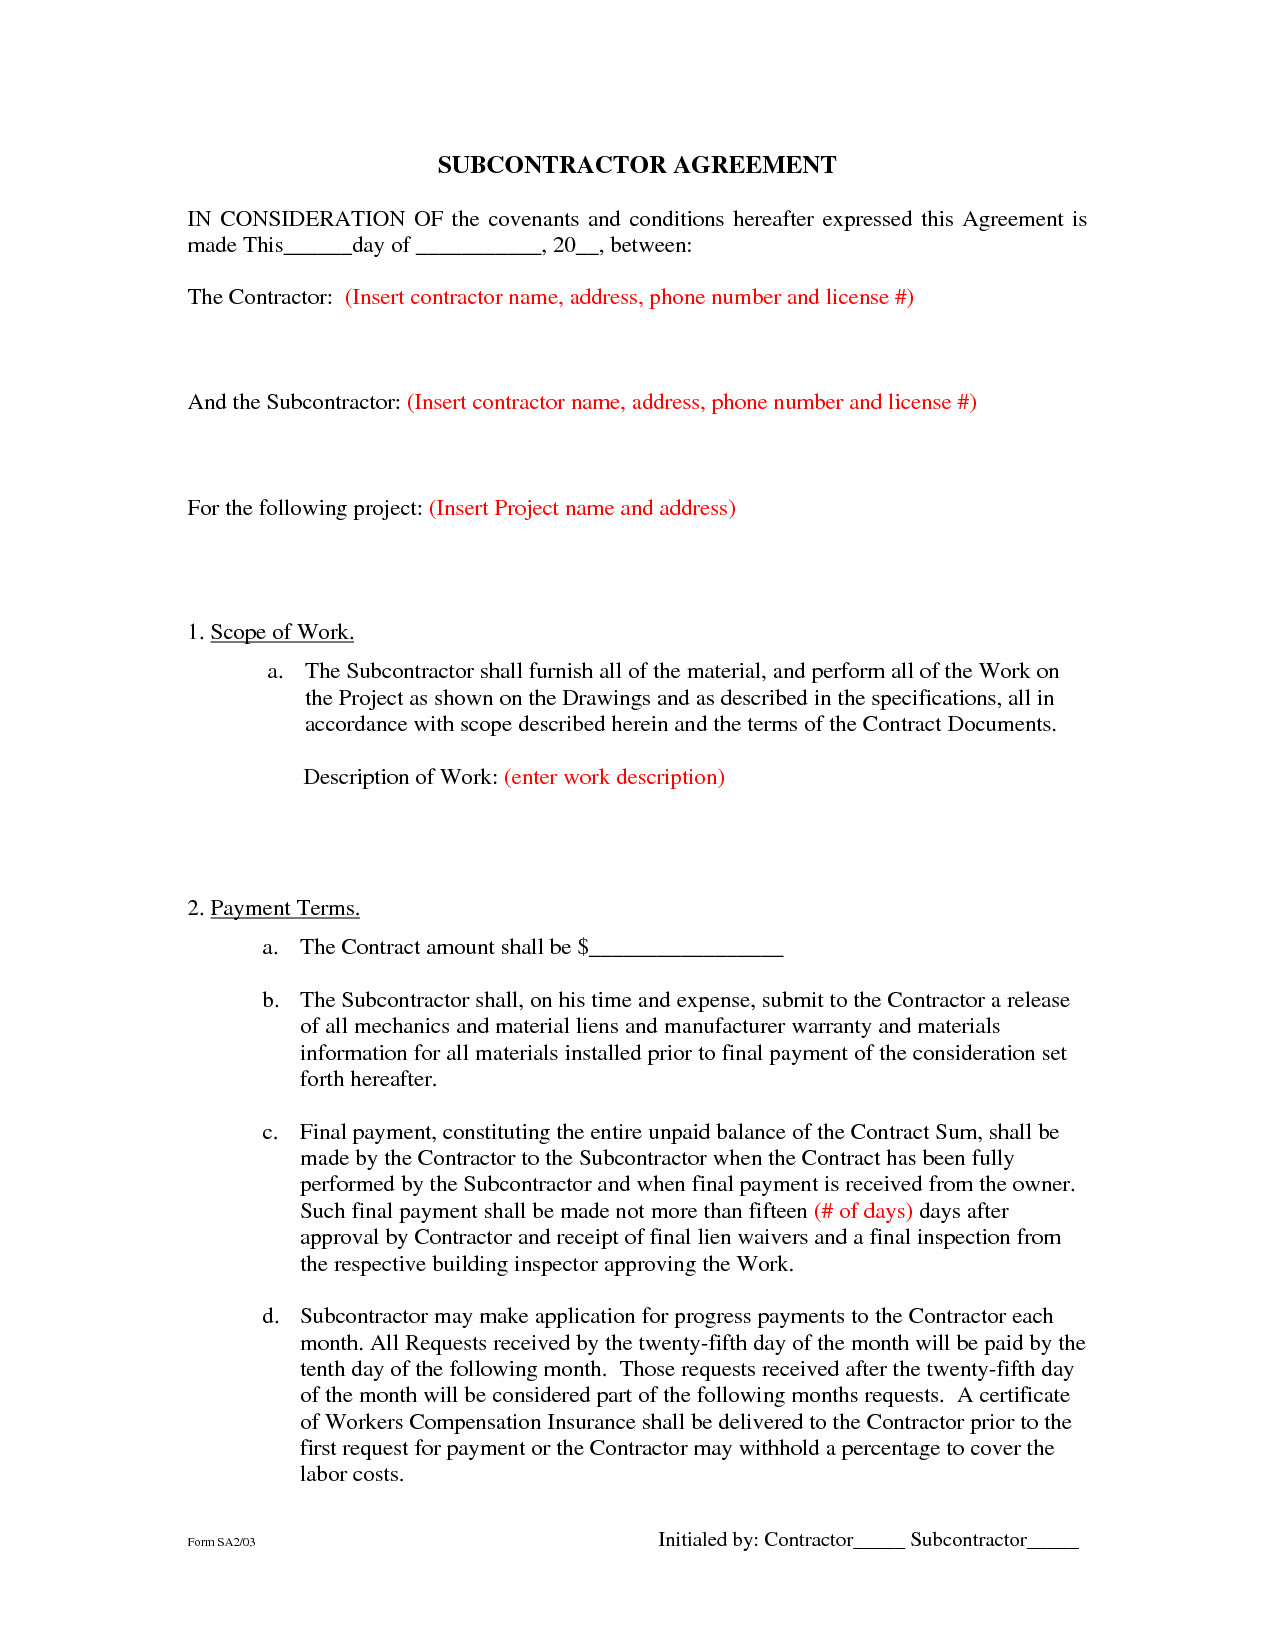 Subcontractor Agreement Forms by BeunaventuraLongjas